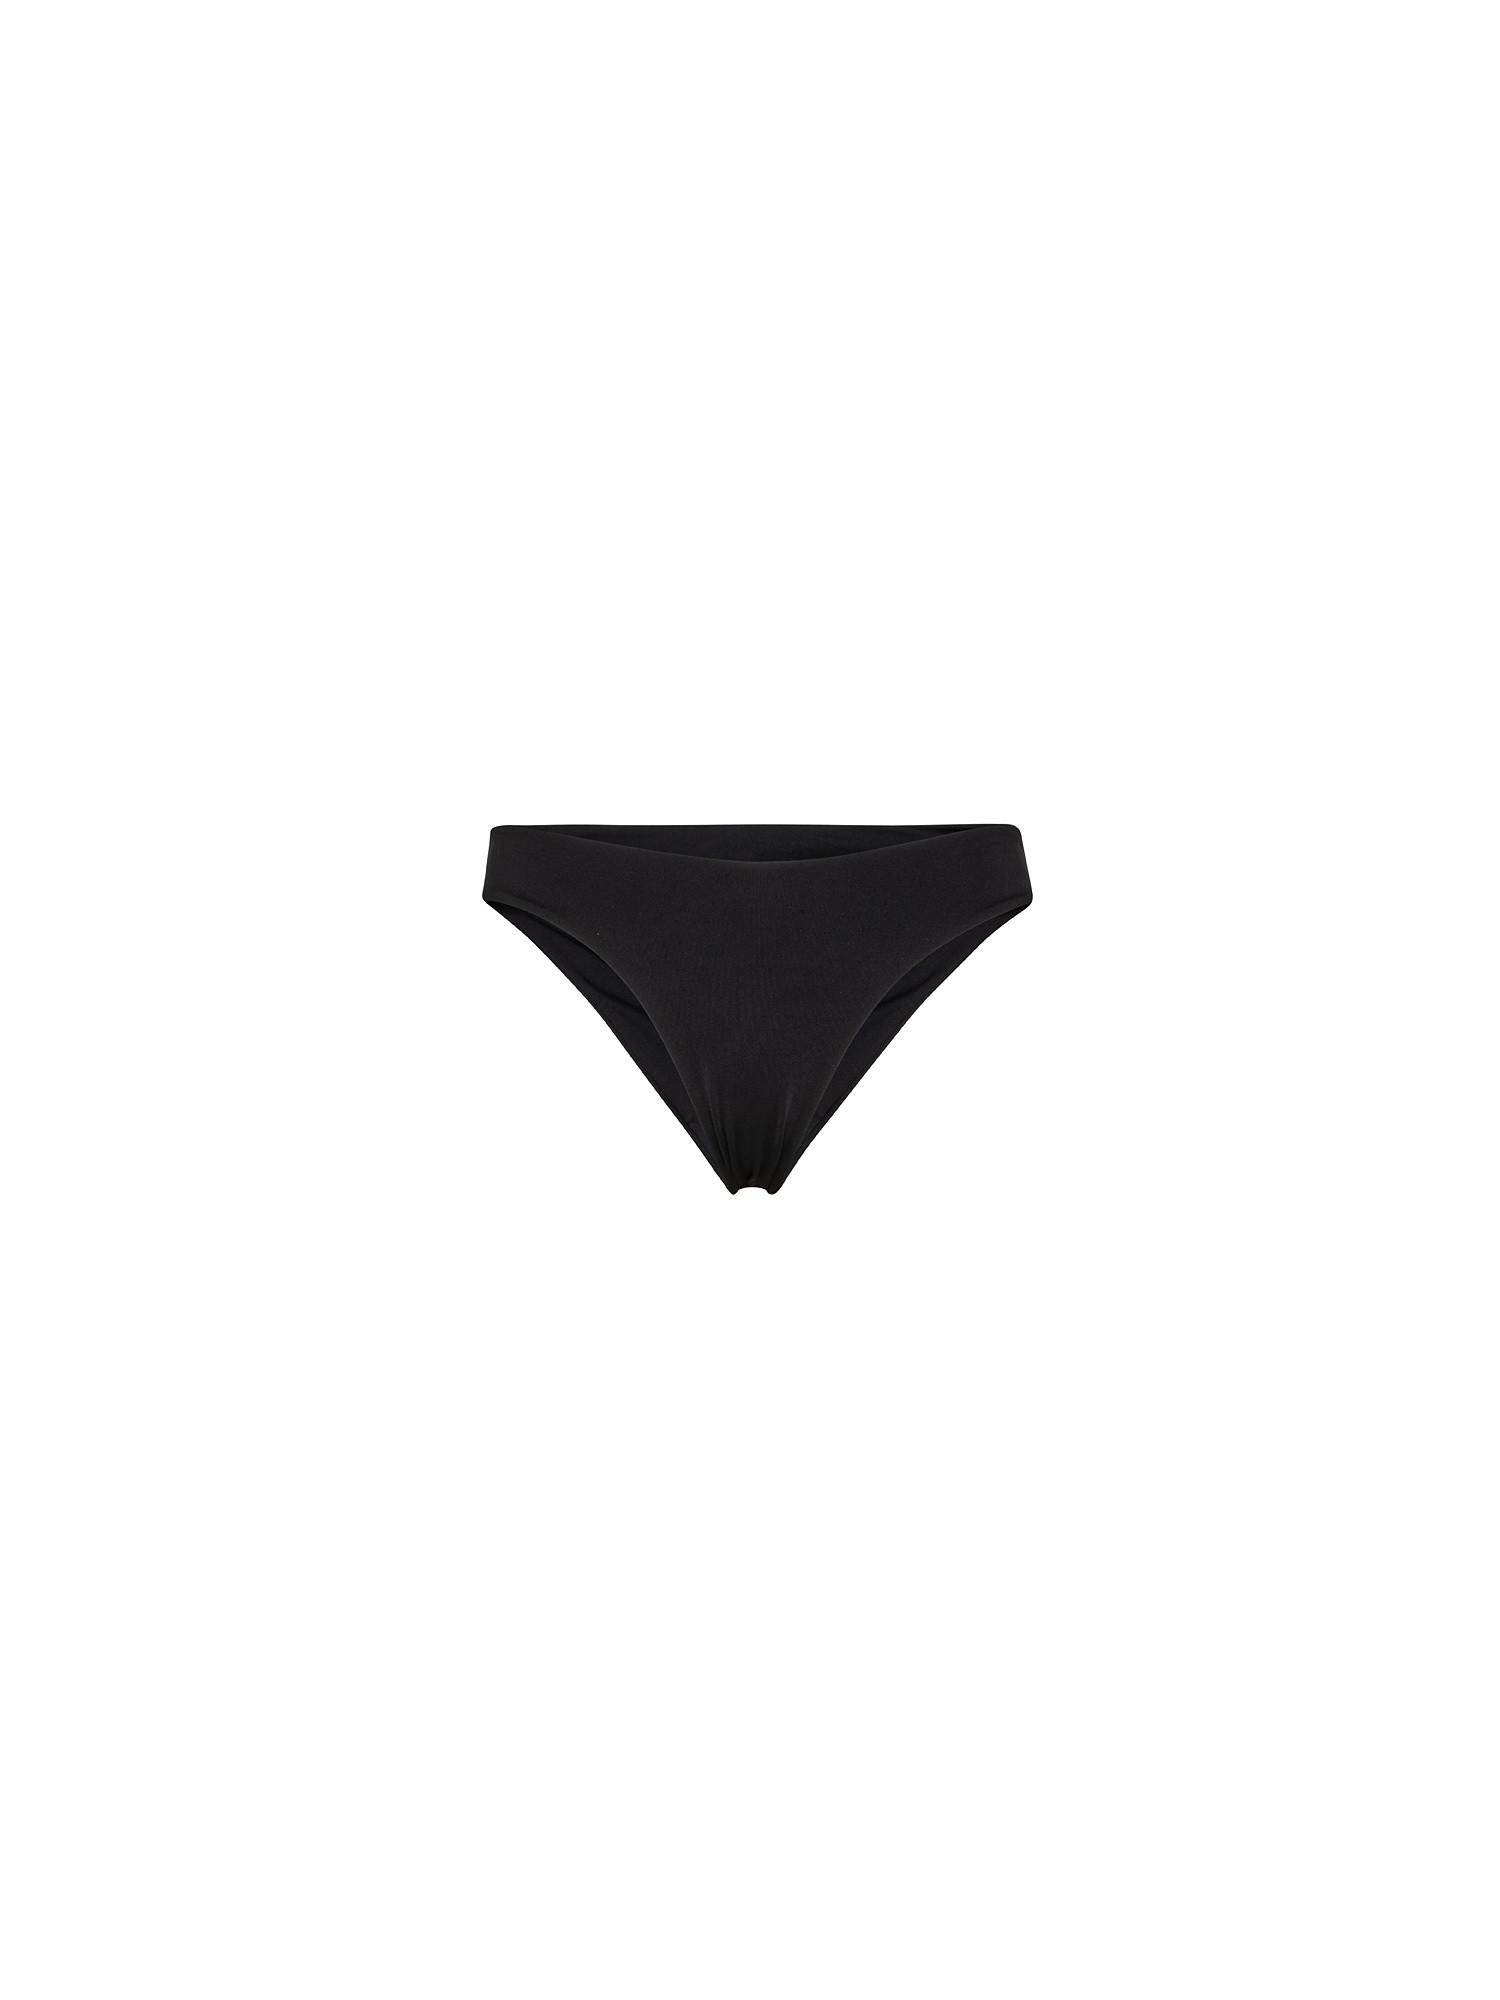 Bikini bottom brazilian brief, Black, large image number 0